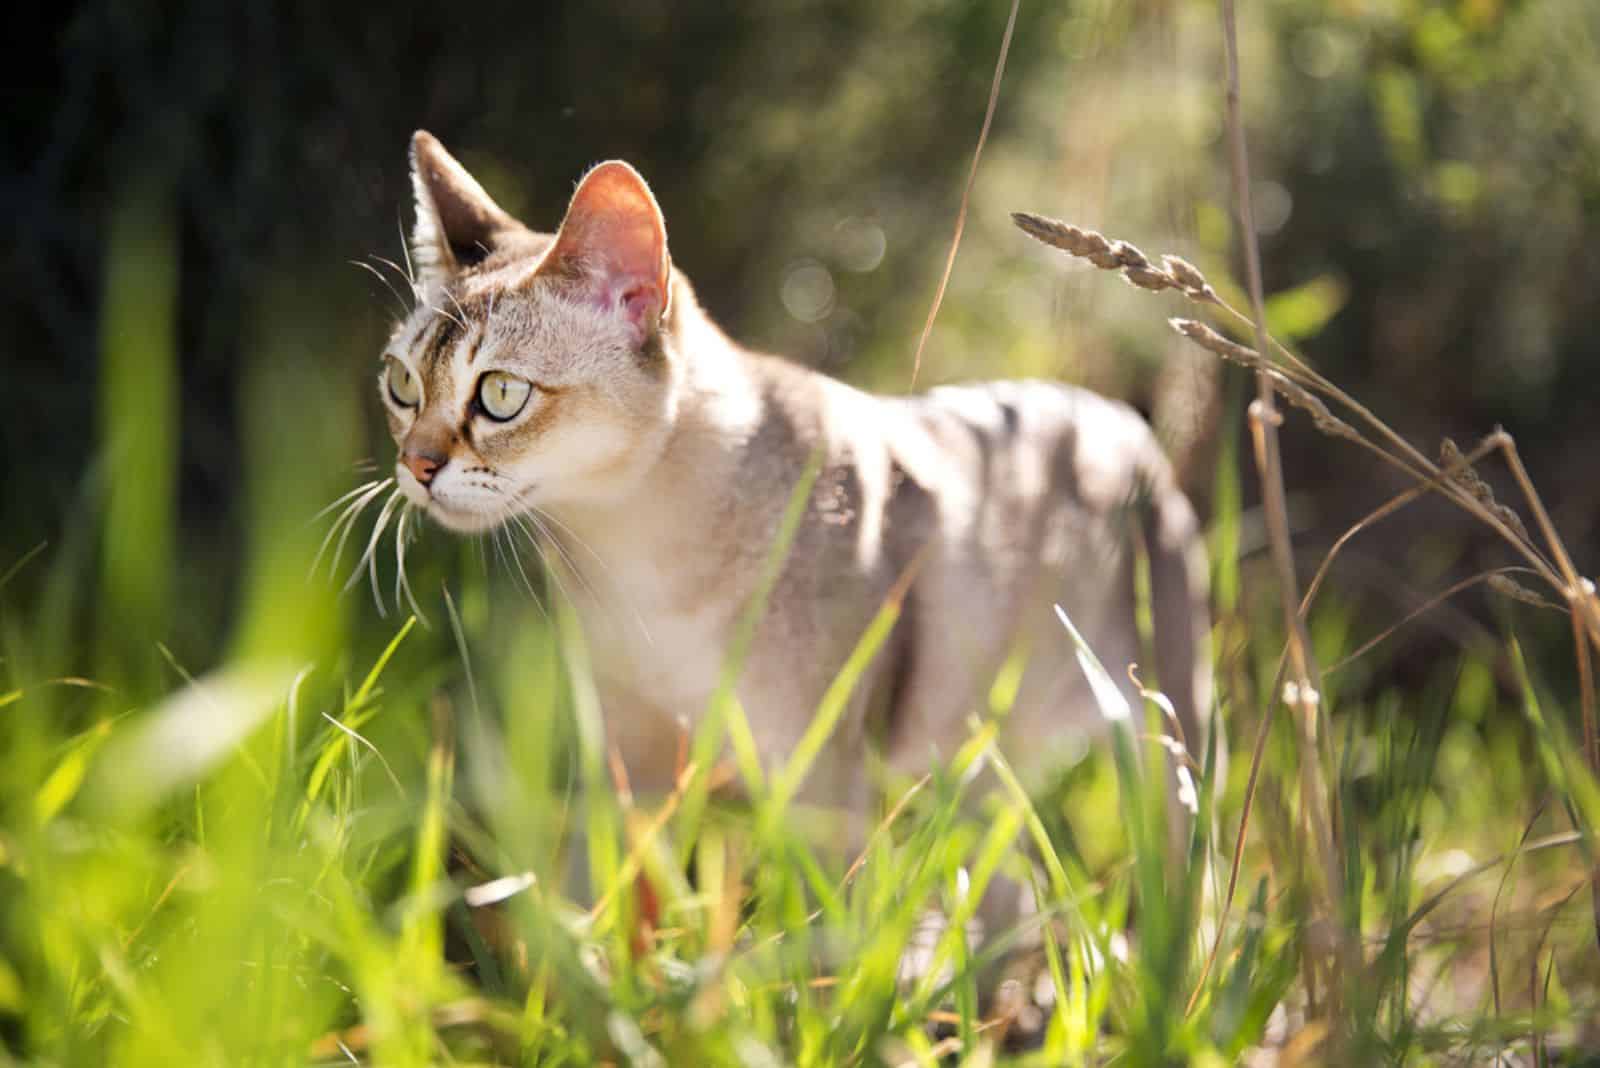 Singapura cat in the grass